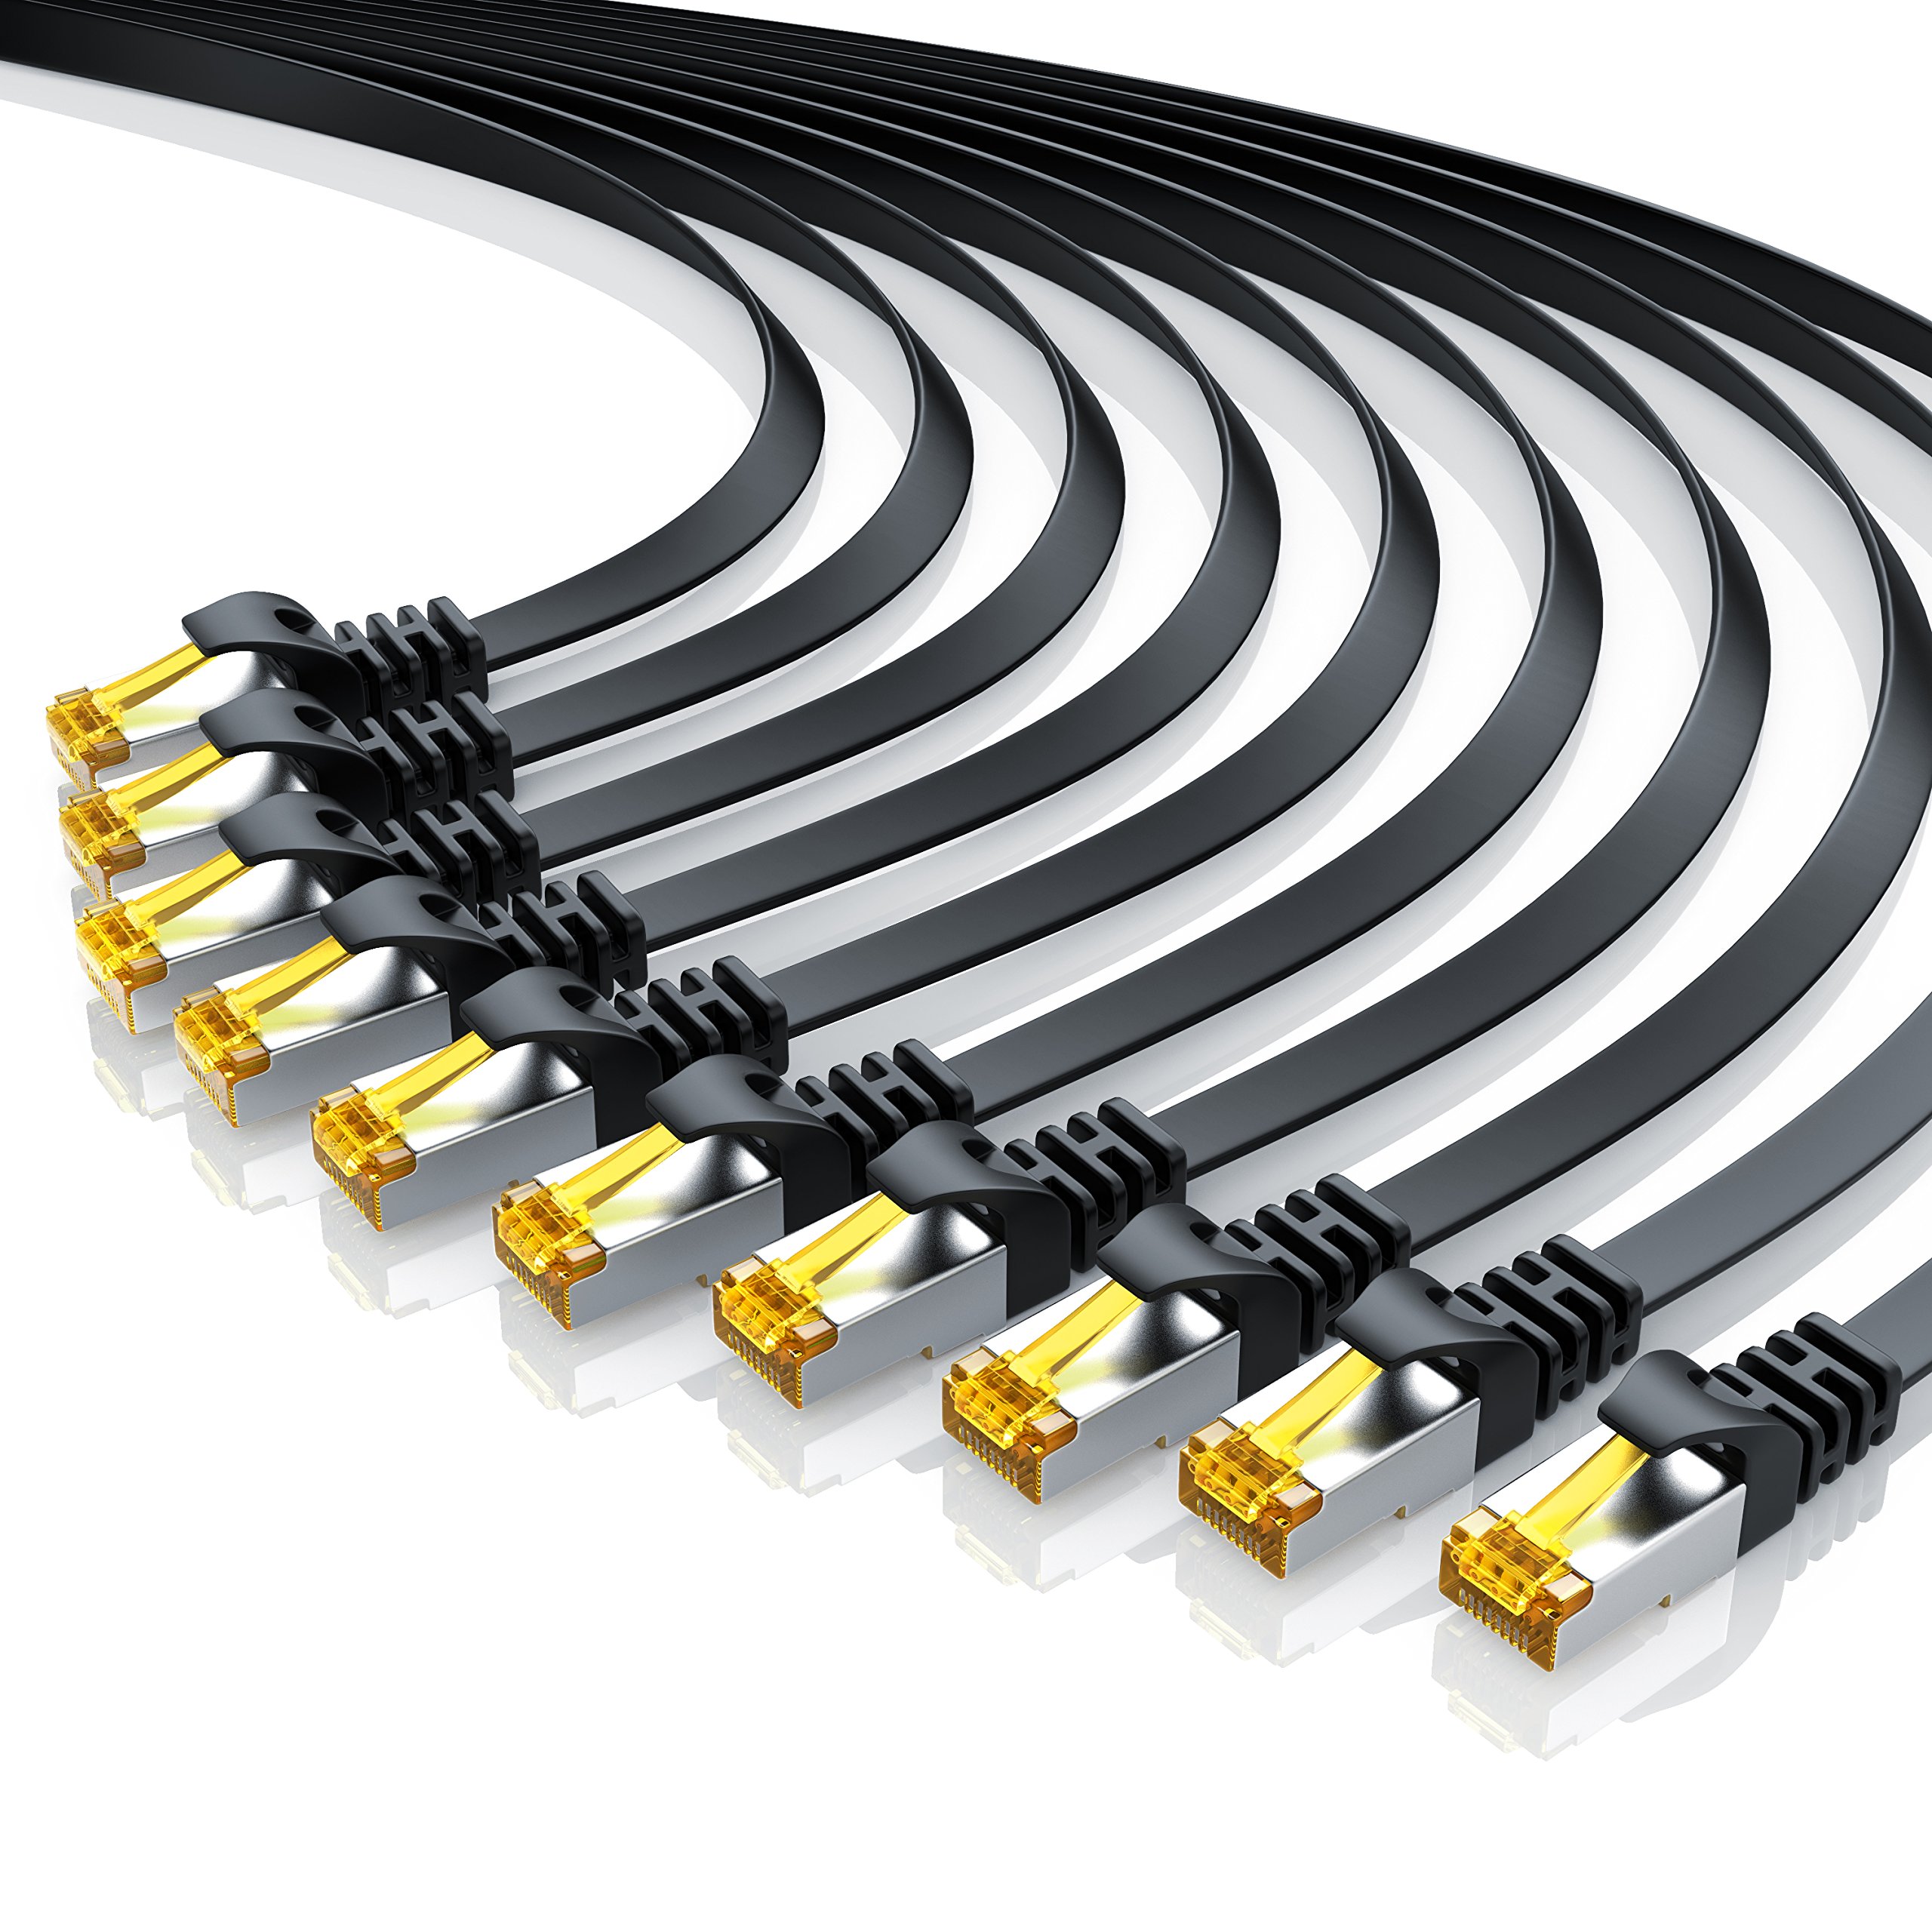 CSL - 10 x 1m - CAT.7 Gigabit Ethernet LAN Flachband Netzwerkkabel - Flachbandkabel Verlegekabel RJ45-10 100 1000 Mbit/s Patchkabel kompatibel zu CAT.5 CAT.5e CAT.6 - schwarz